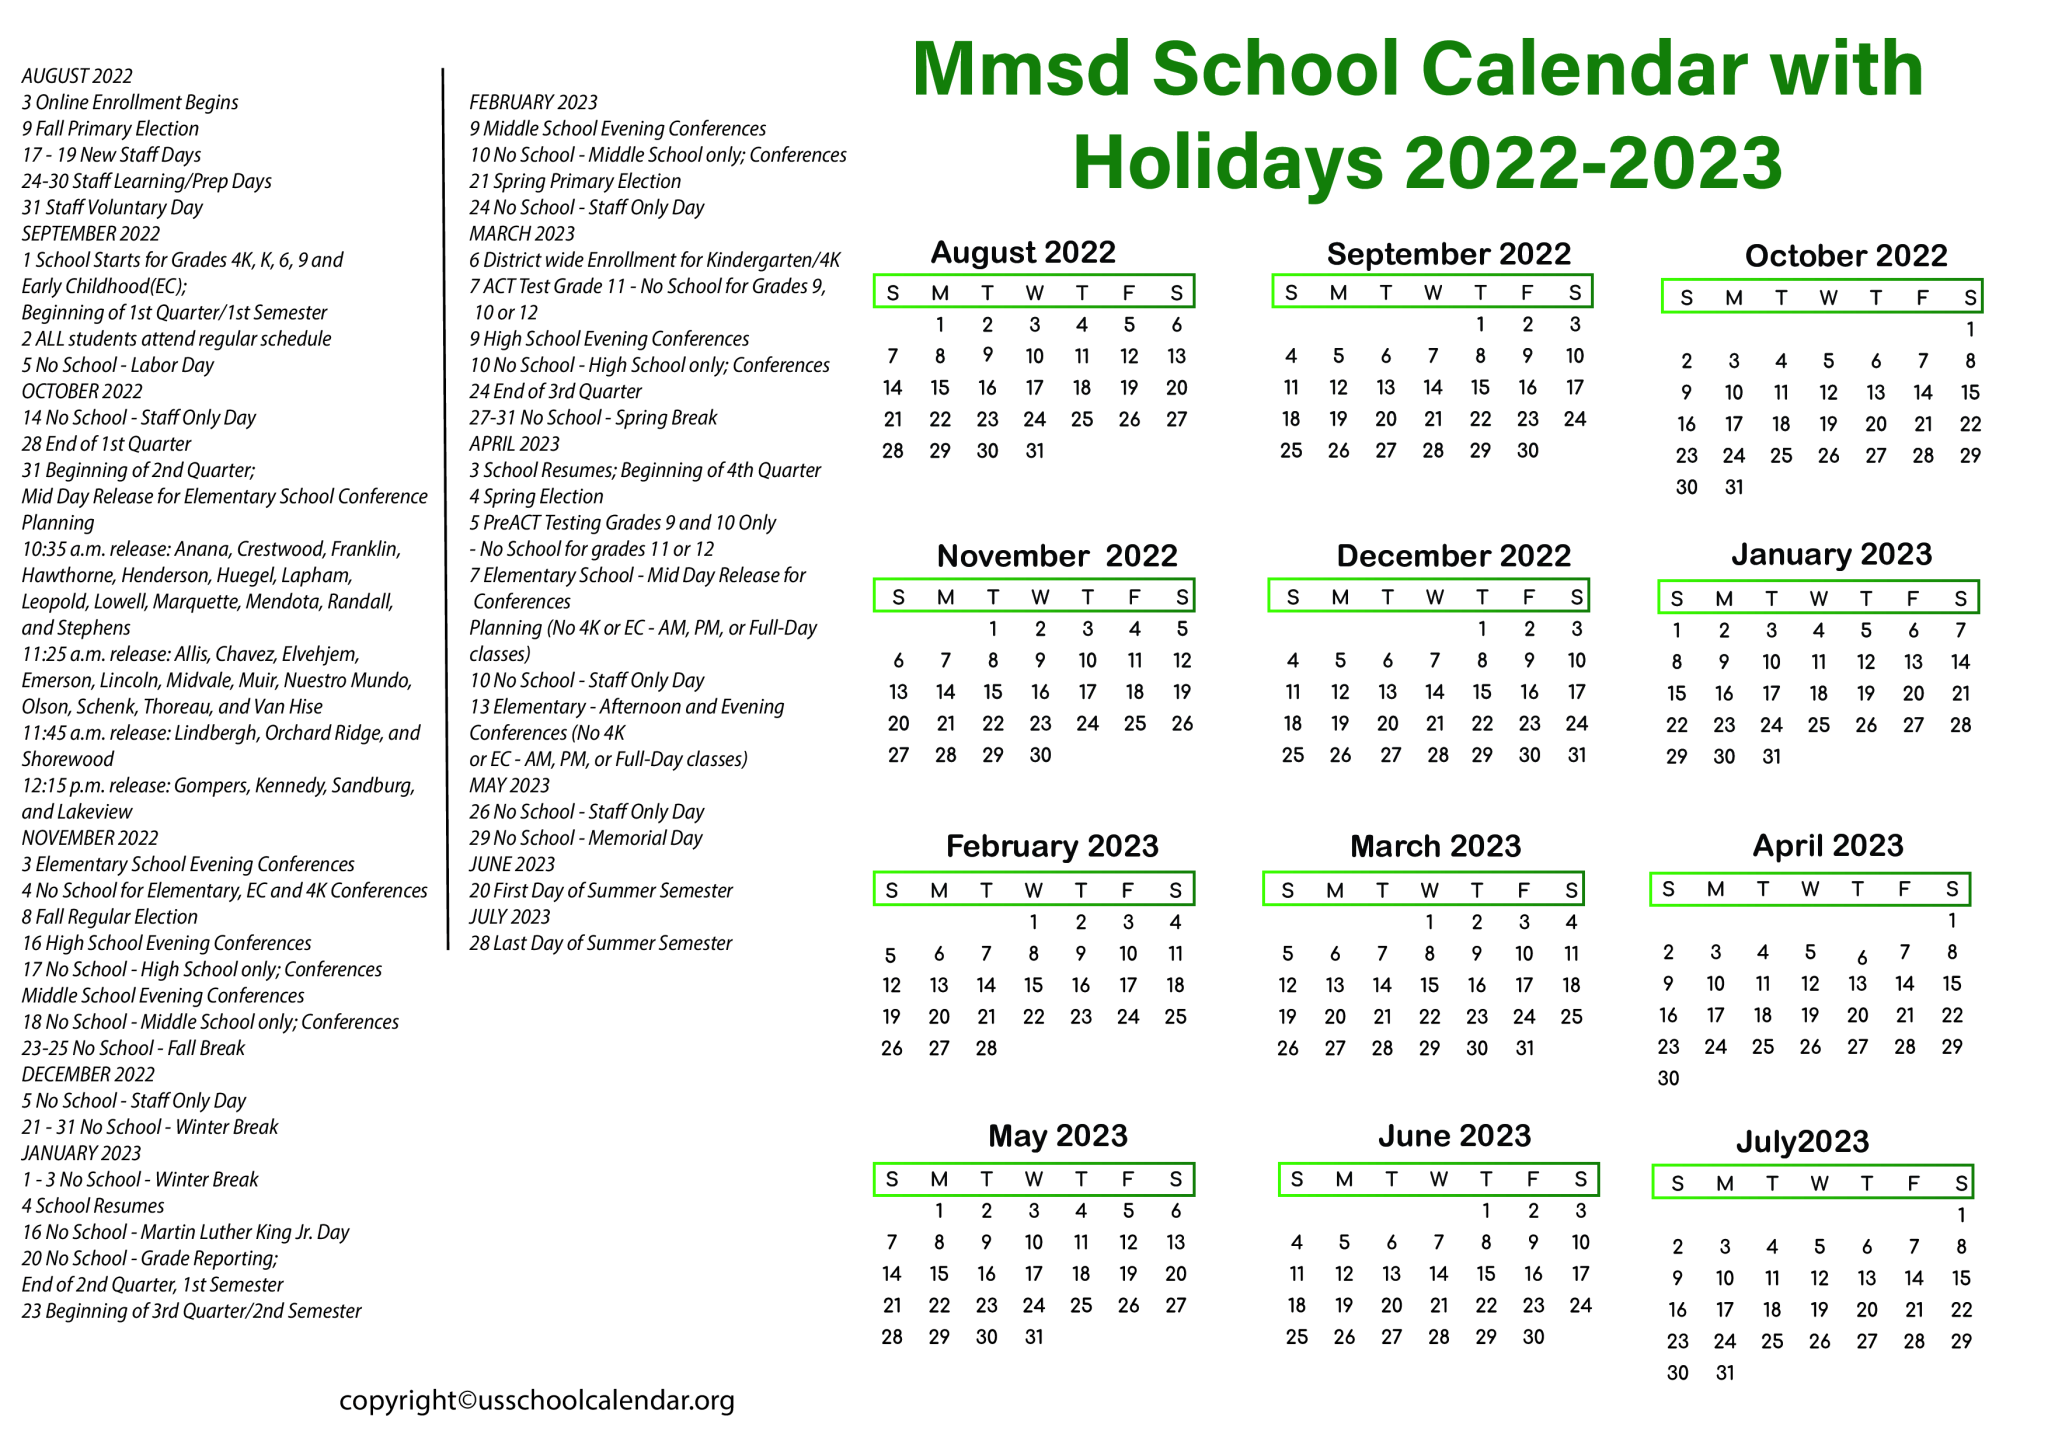 madison-metropolitan-mmsd-school-calendar-with-holidays-2023